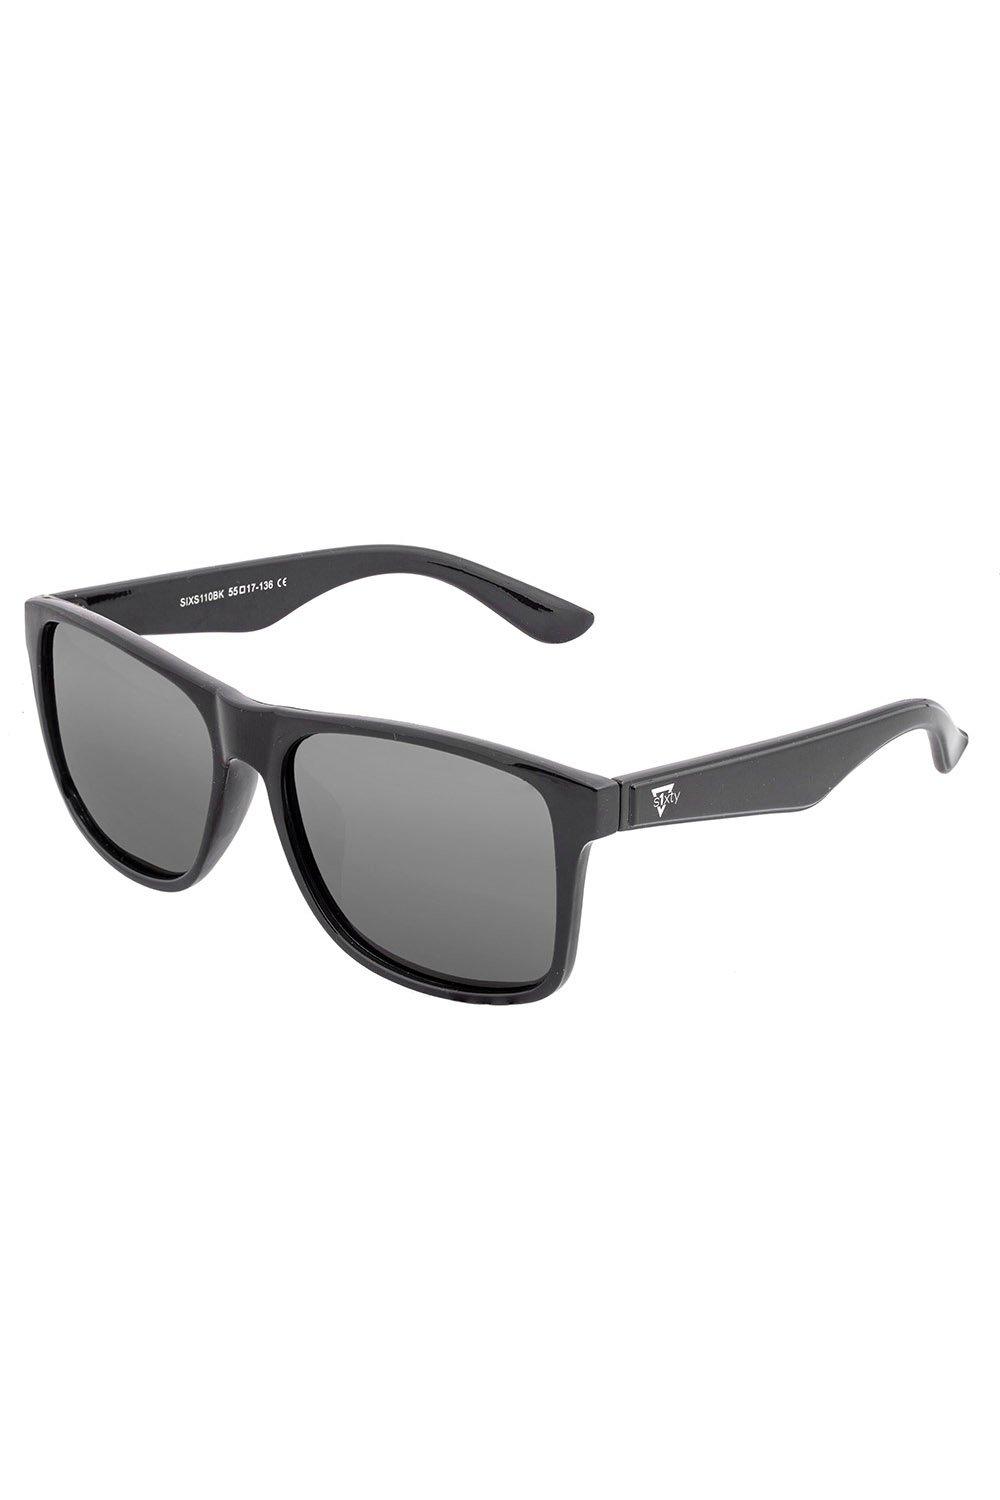 Solaro Polarized Sunglasses